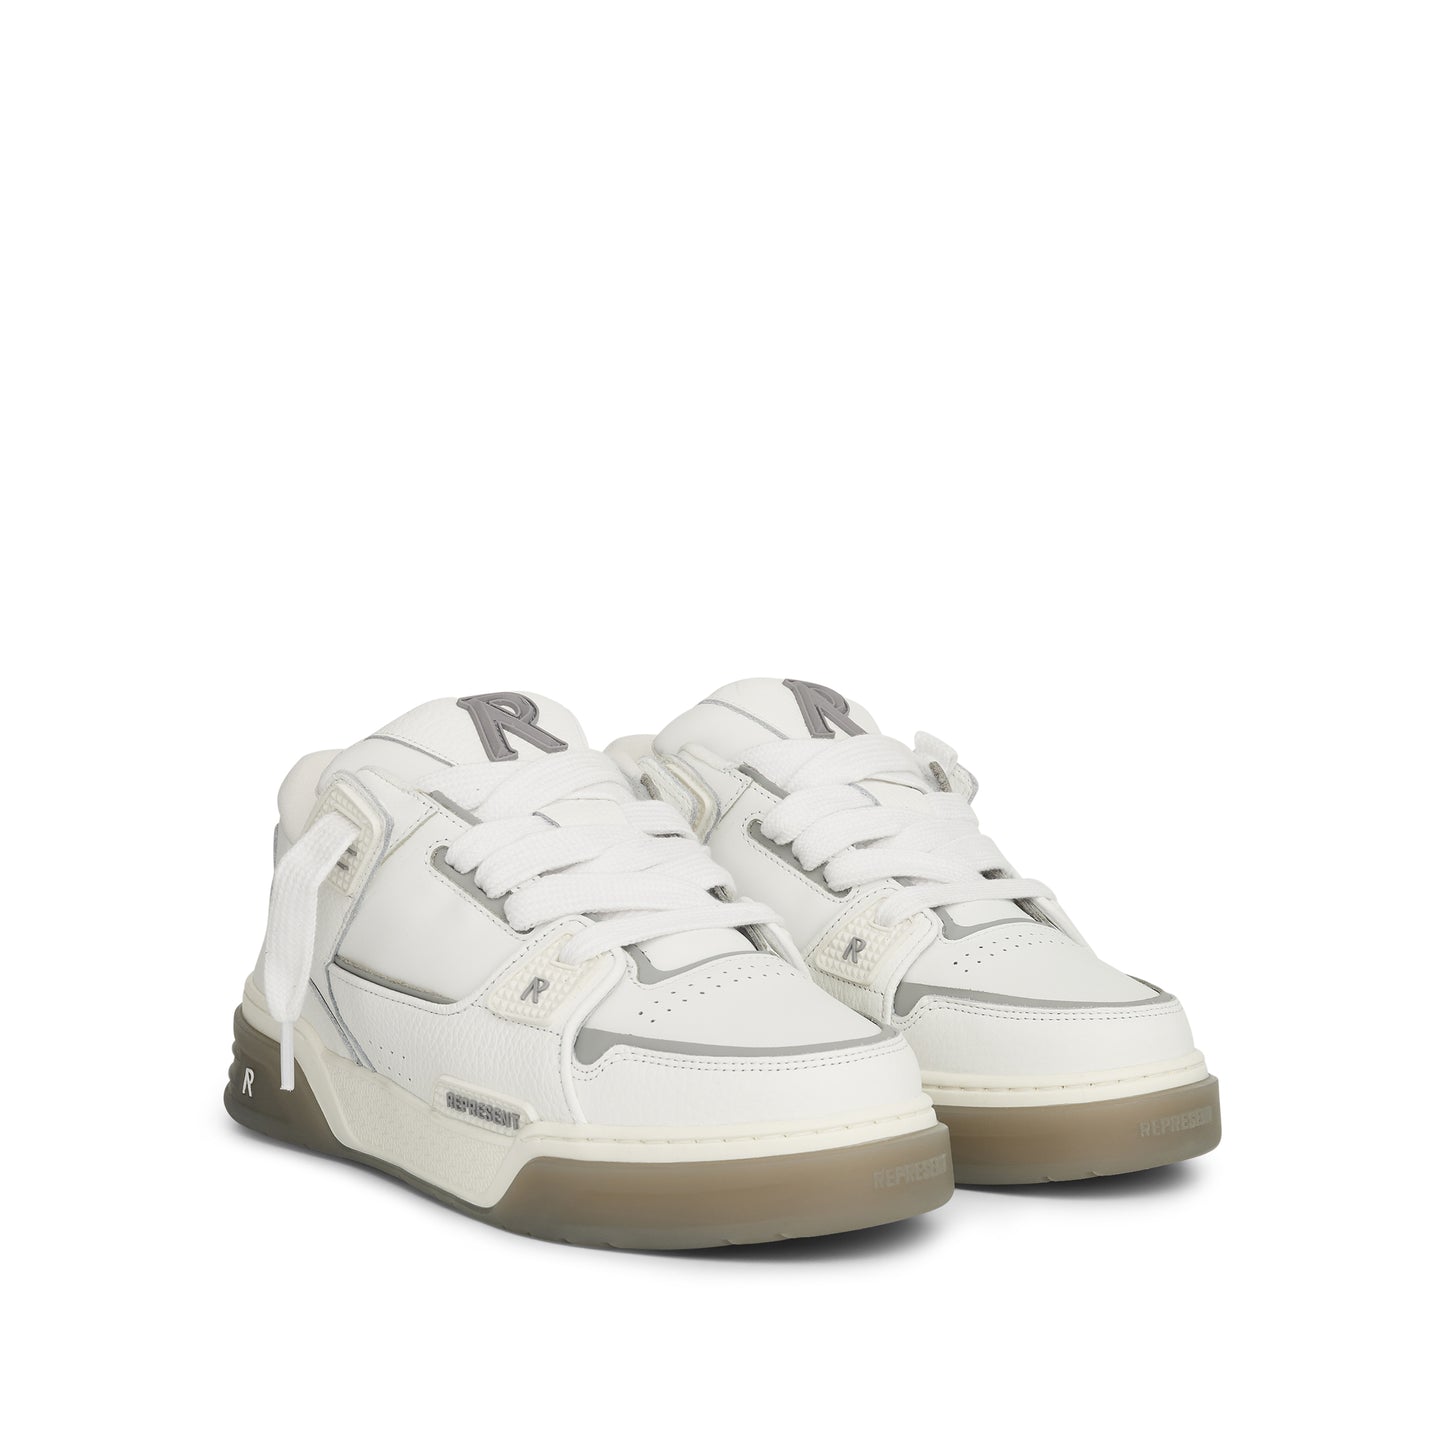 Studio Low Top Sneaker in White/Grey